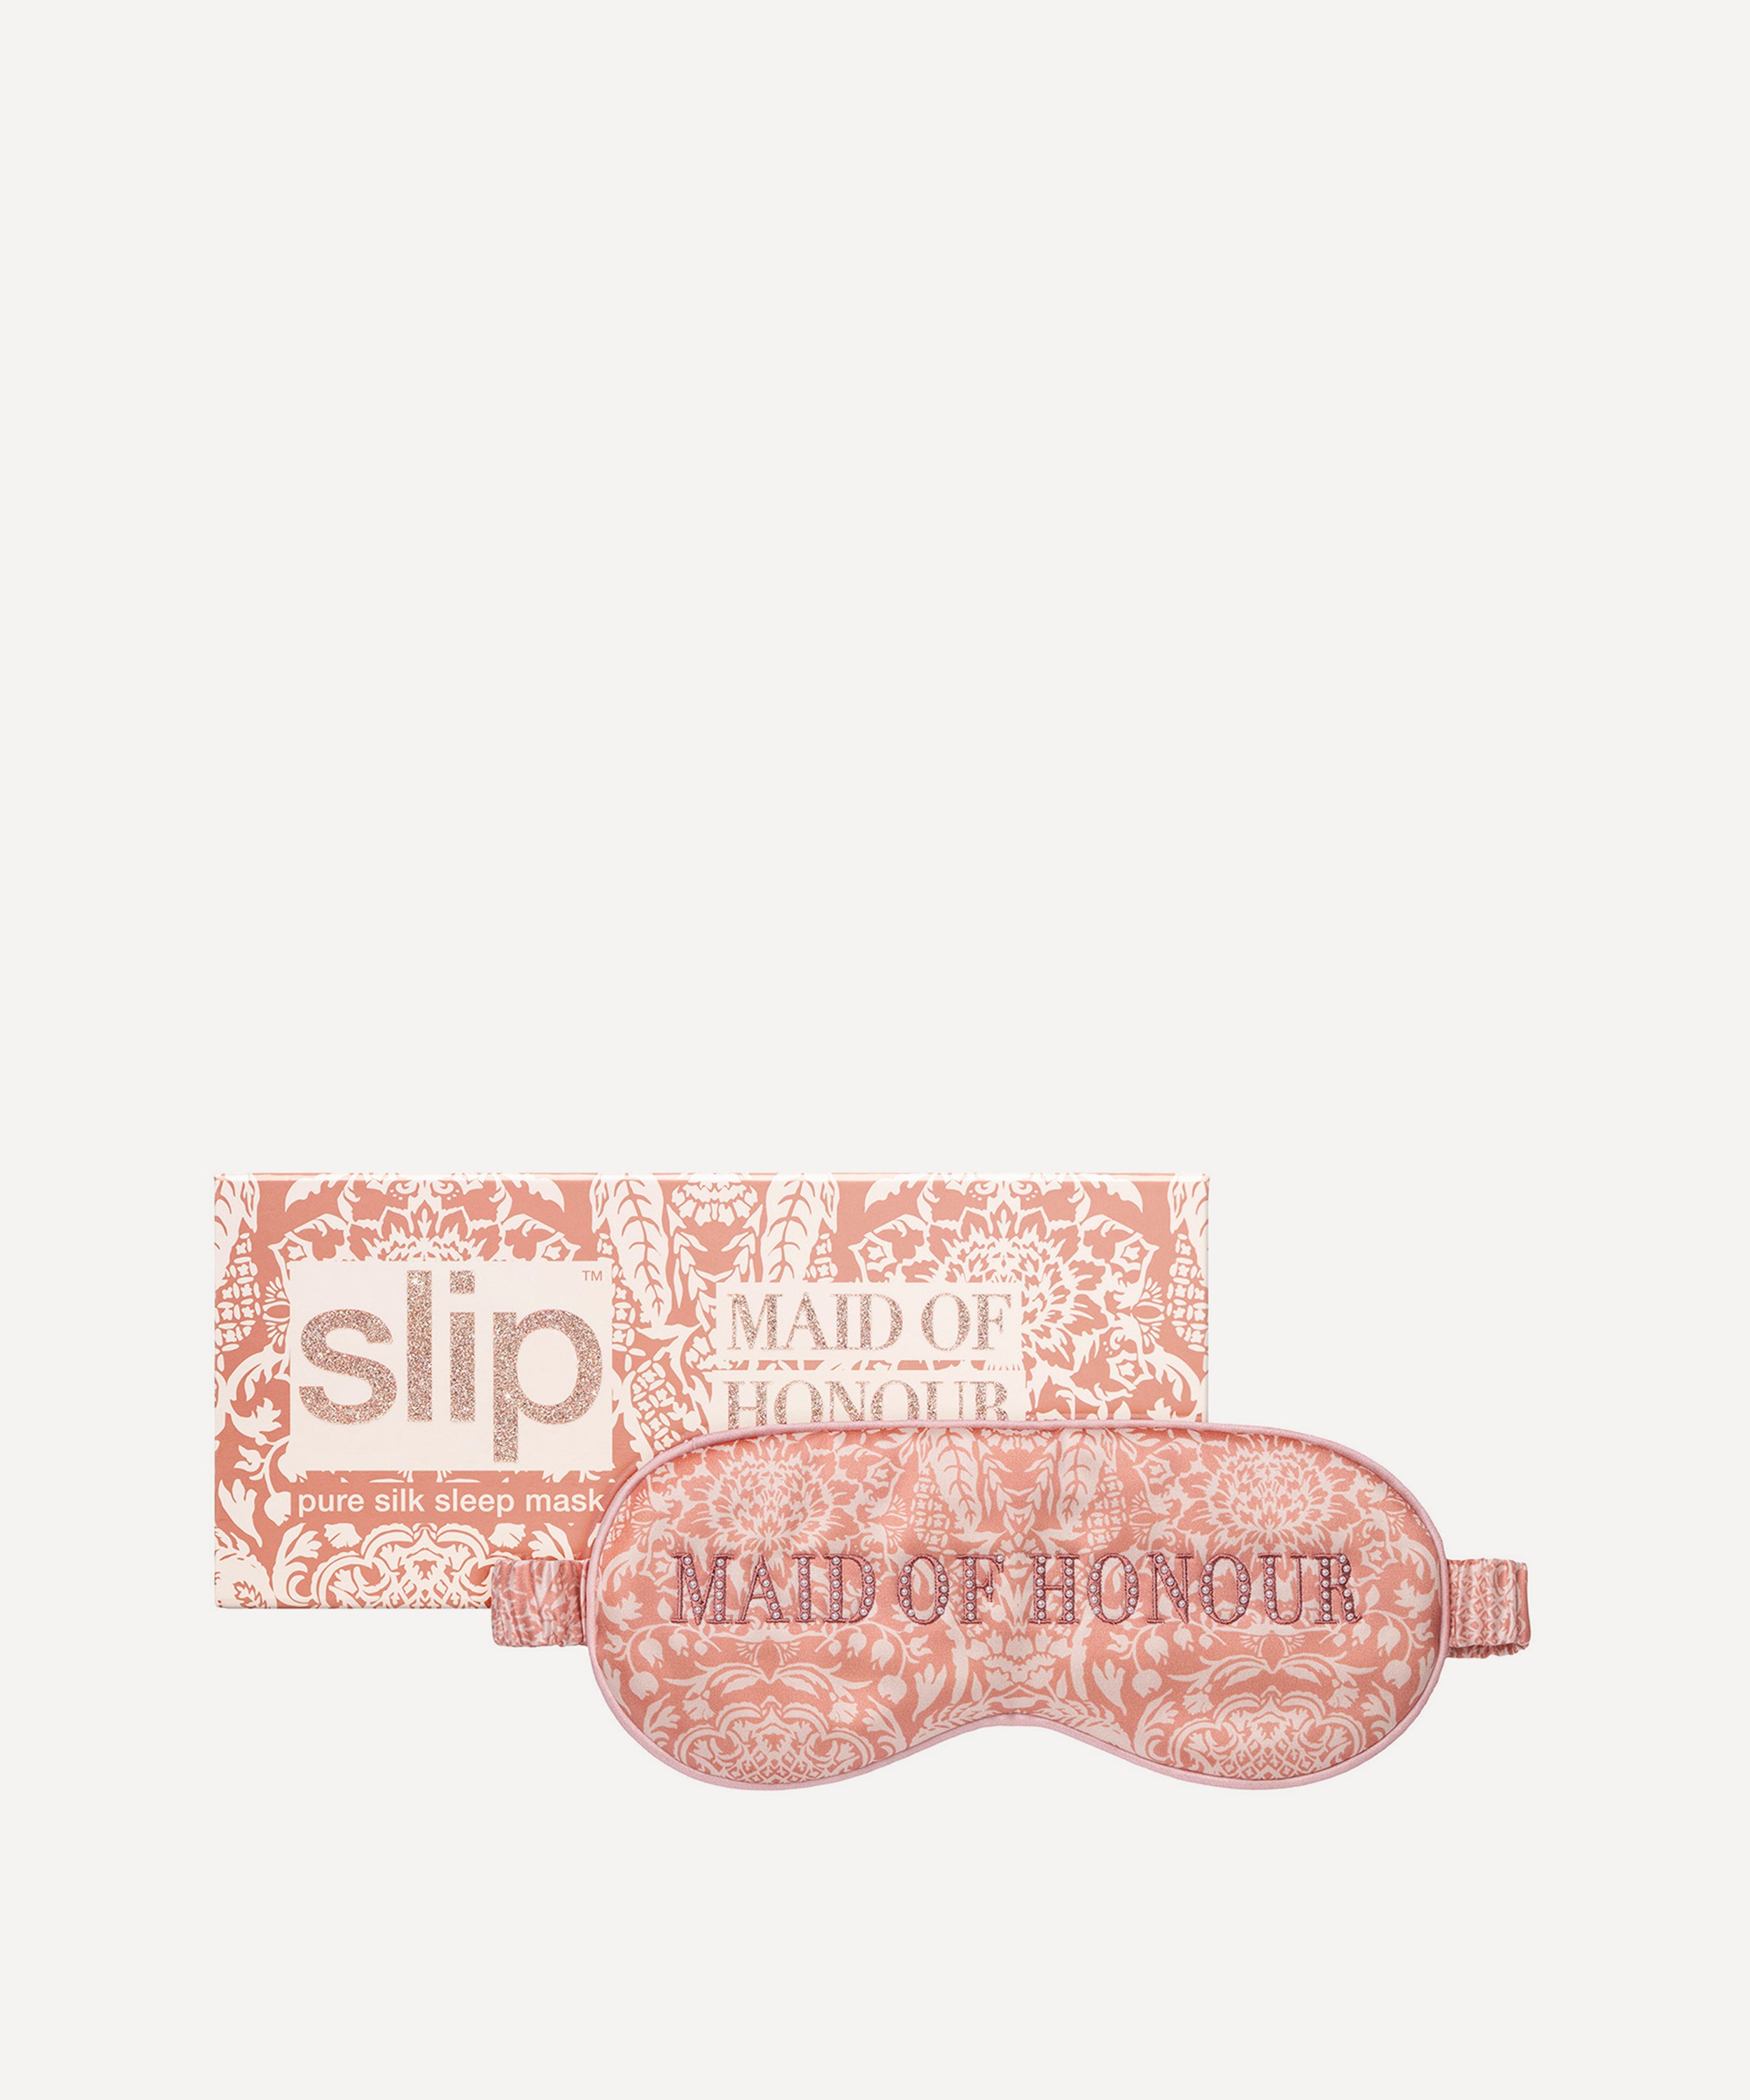 Slip Maid of Honour Silk Sleep Mask